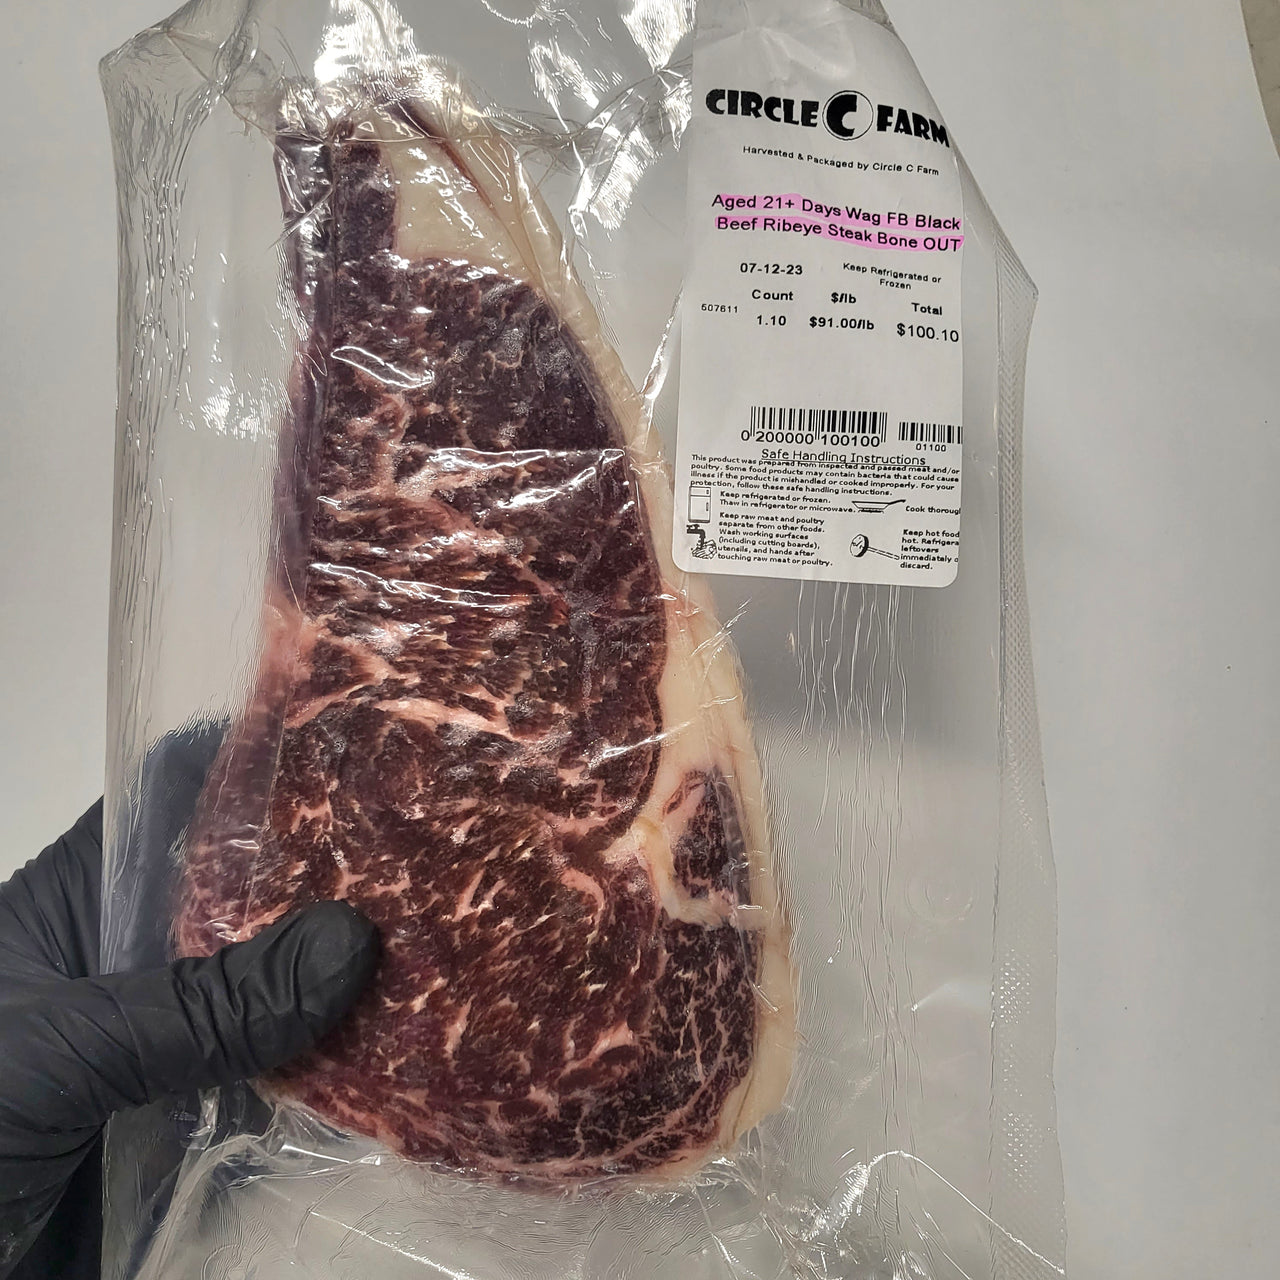 Grass Fed Grass Finished Beef Ribeye Steak Bone OUT Japanese Black Wagyu Beef Full Blood AGED 21+ Days